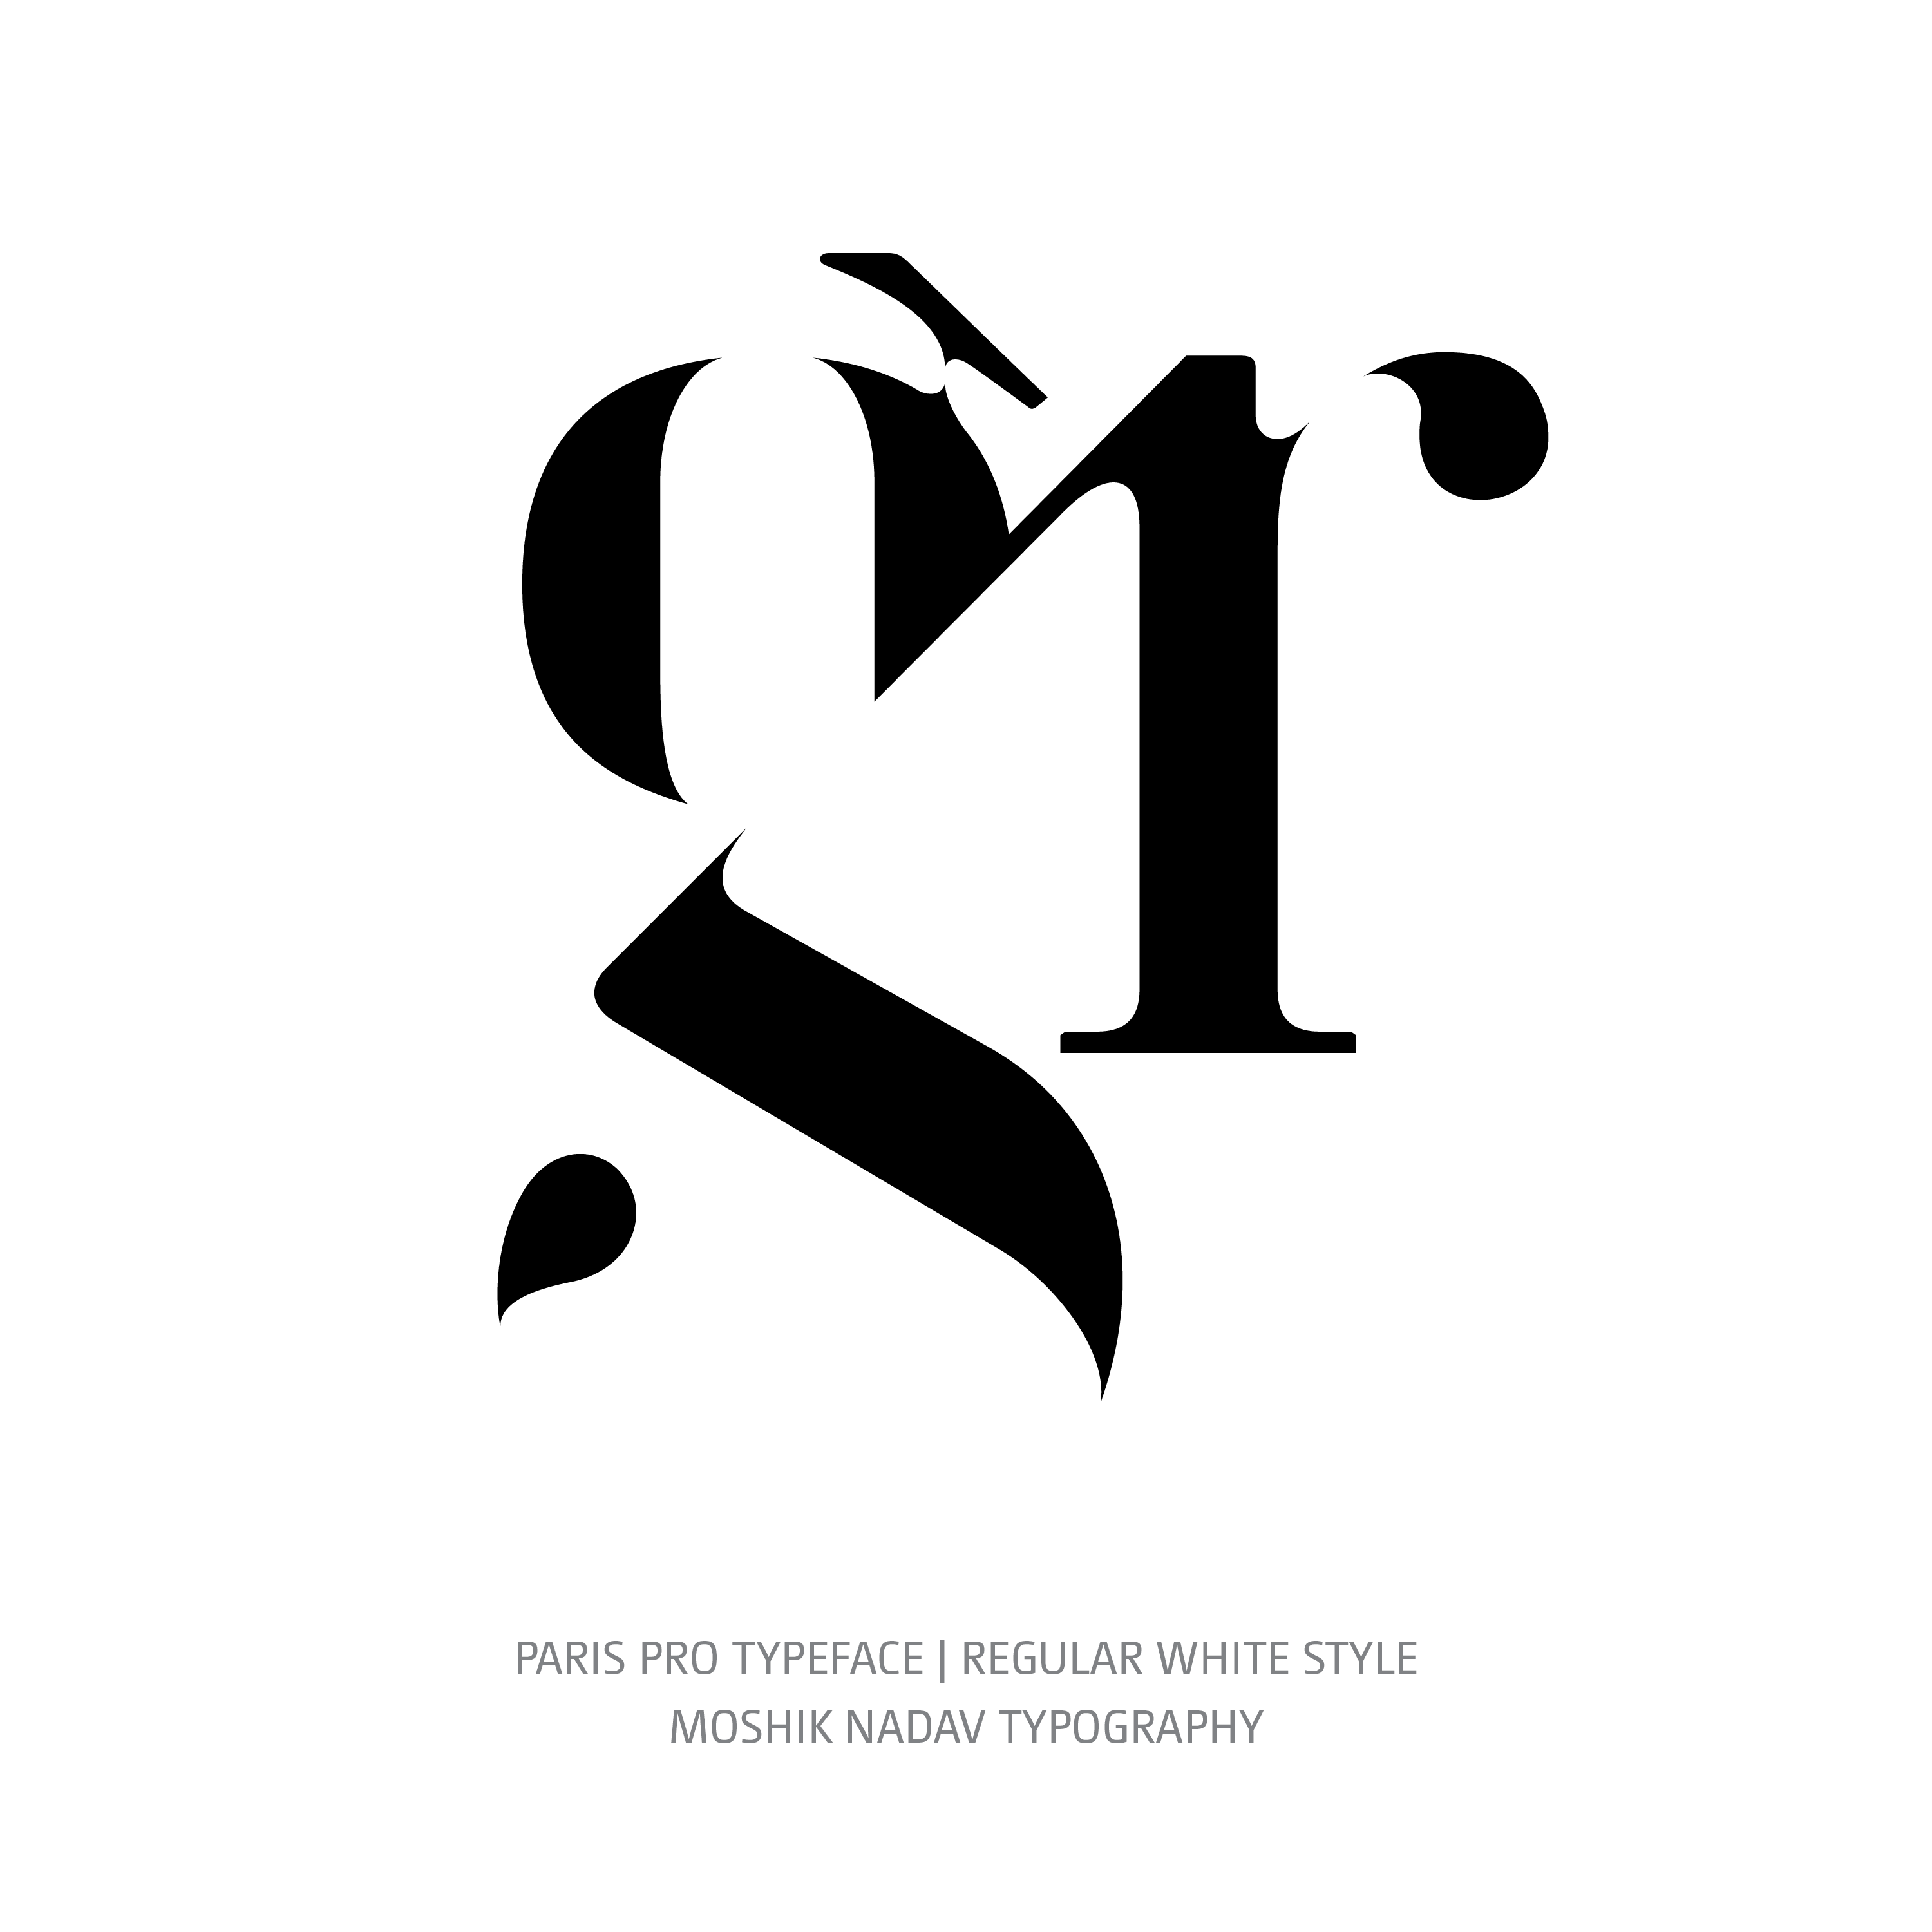 Paris Pro Typeface Regular White gr ligature